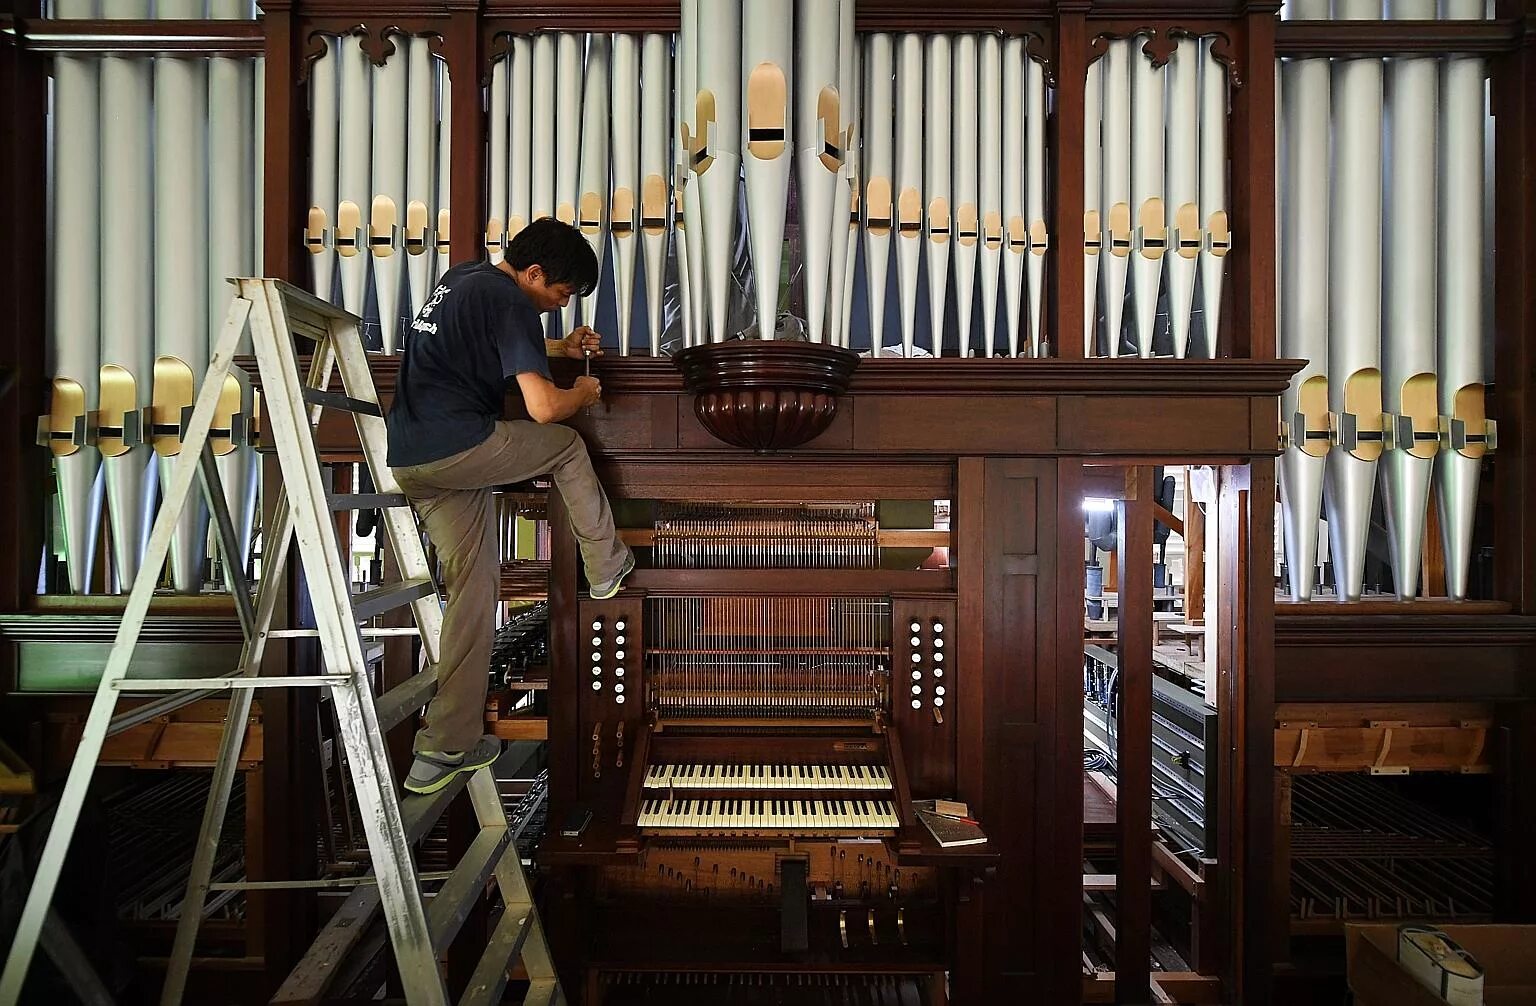 Орган мужчины видео. Бах Органная. Орган 17 век Баха. Игра на органе Бах. Орган музыкальный инструмент.